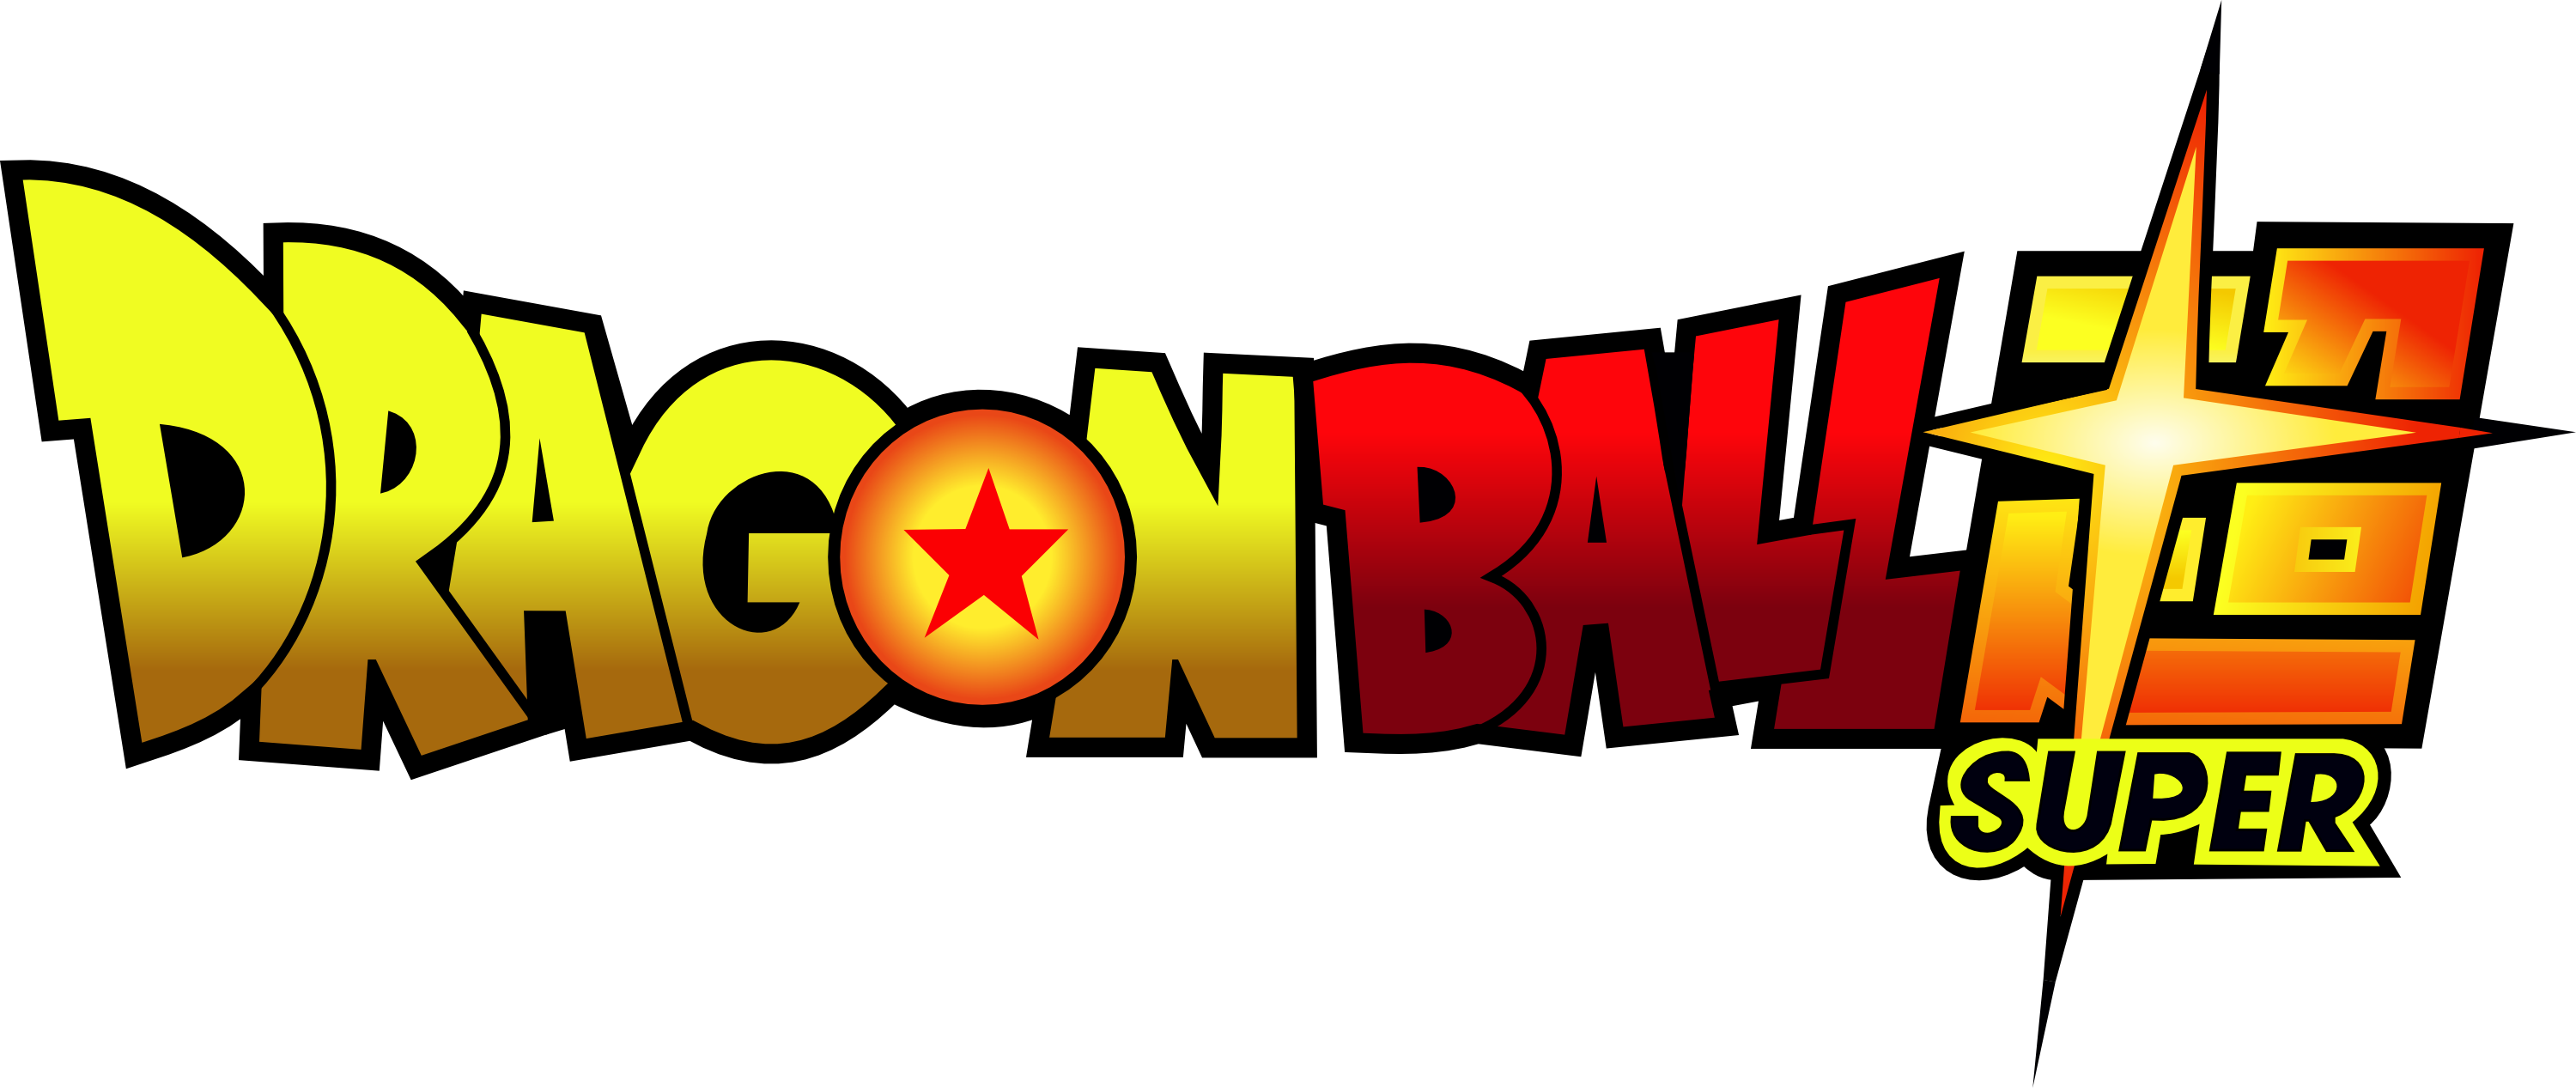 Dragon Ball Super PNG Image